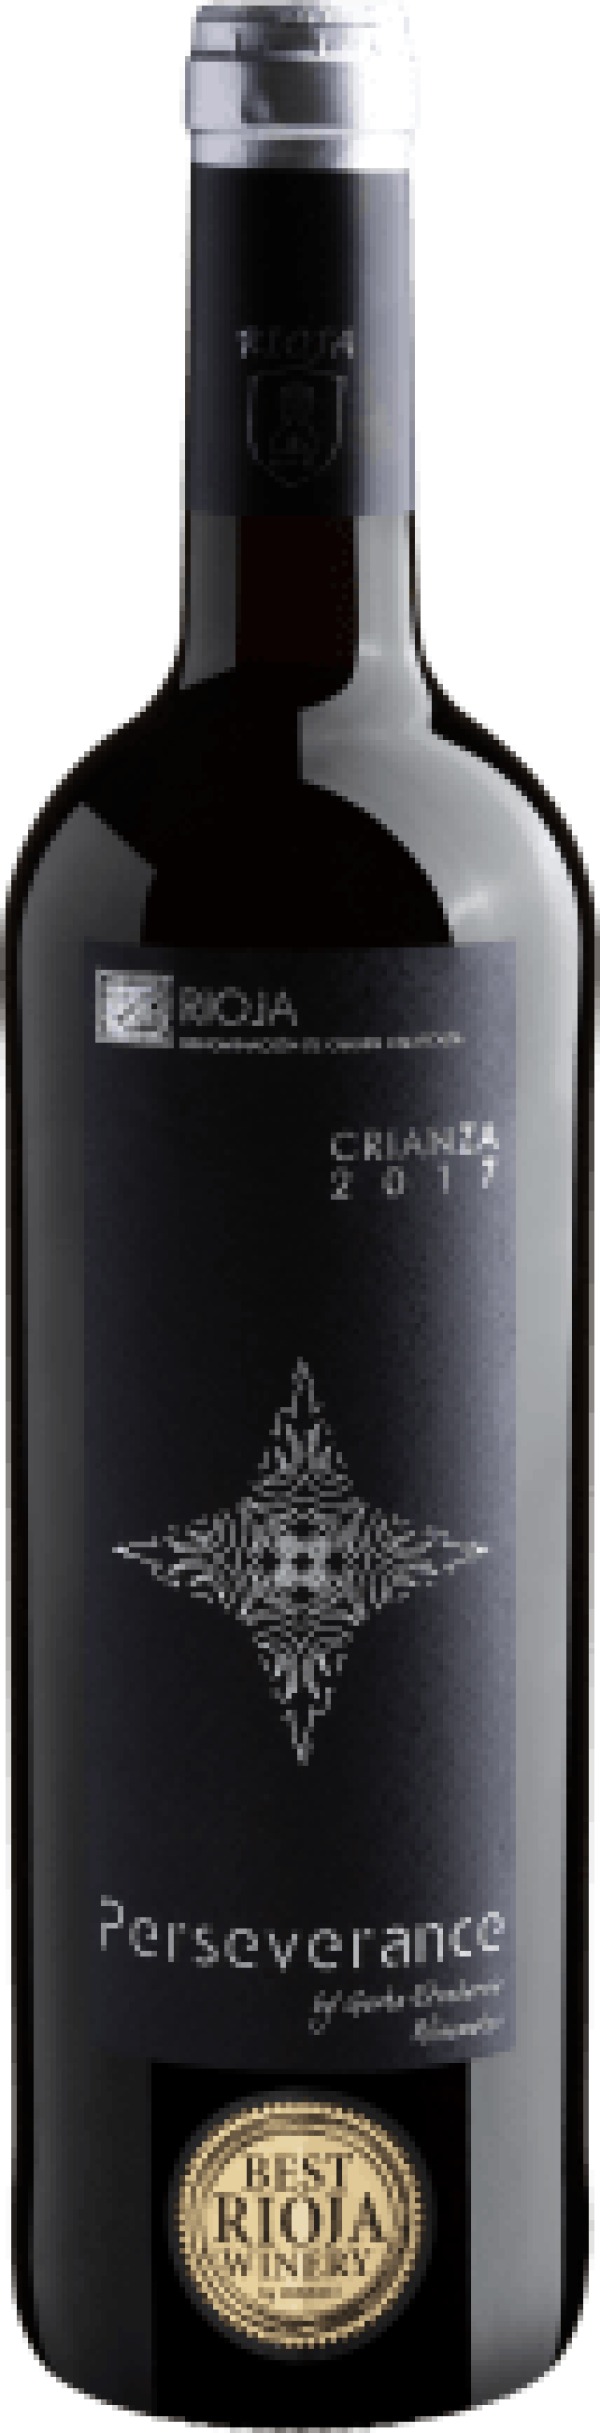 Perseverance Crianza by Gorka Etxebarria Winemaker Rioja DOCa 2017